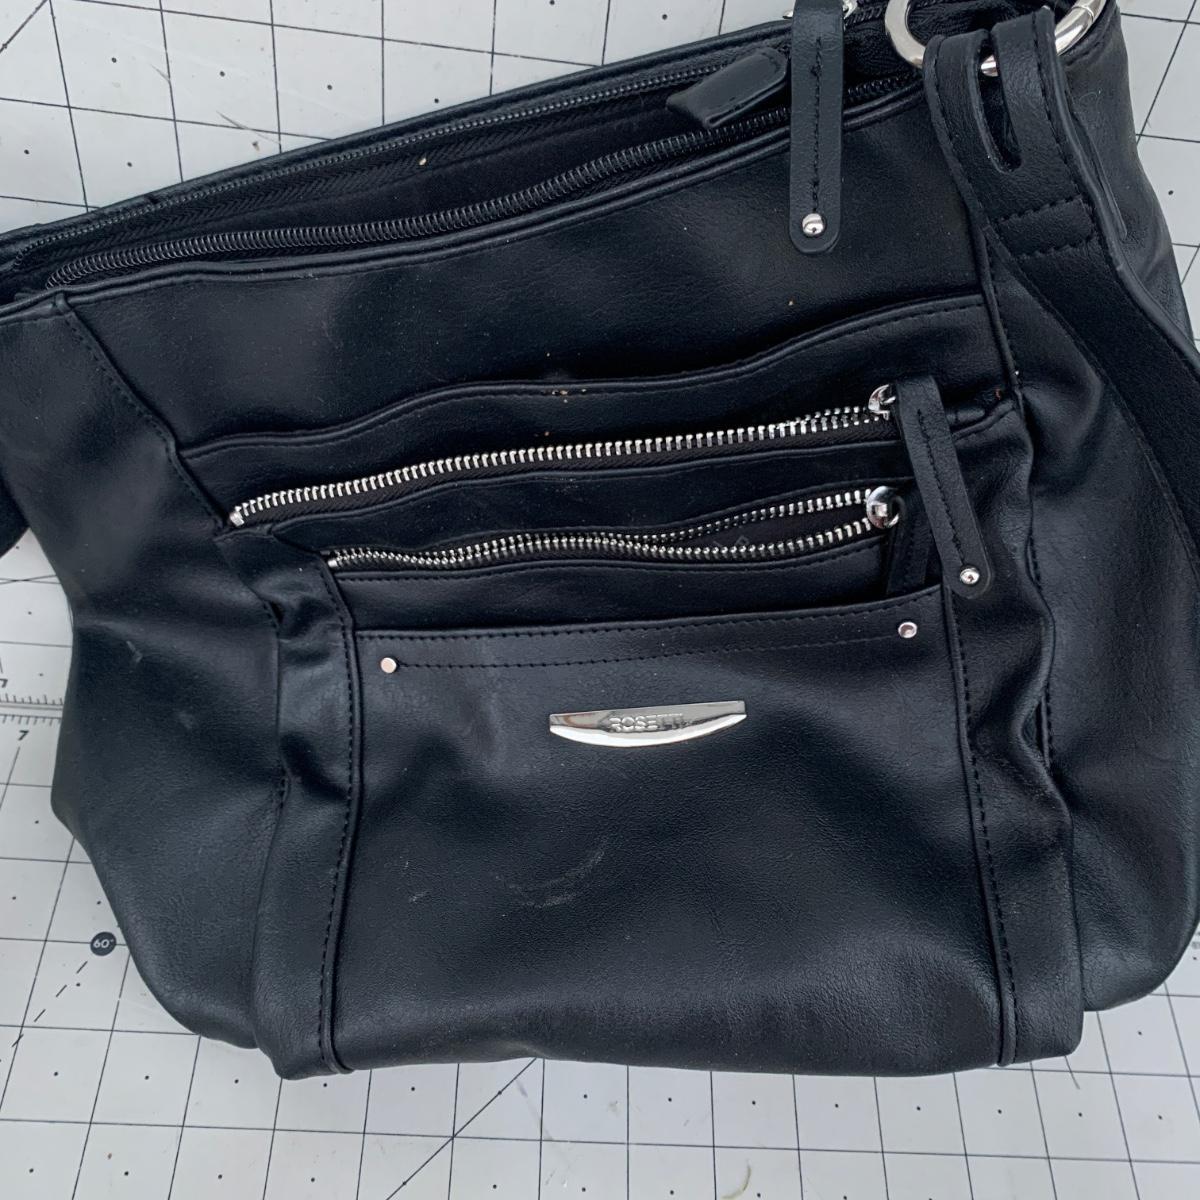 Black Rosetti Purse: Great Condition Large Bag | Fashion, Fashion trends,  Clothes design